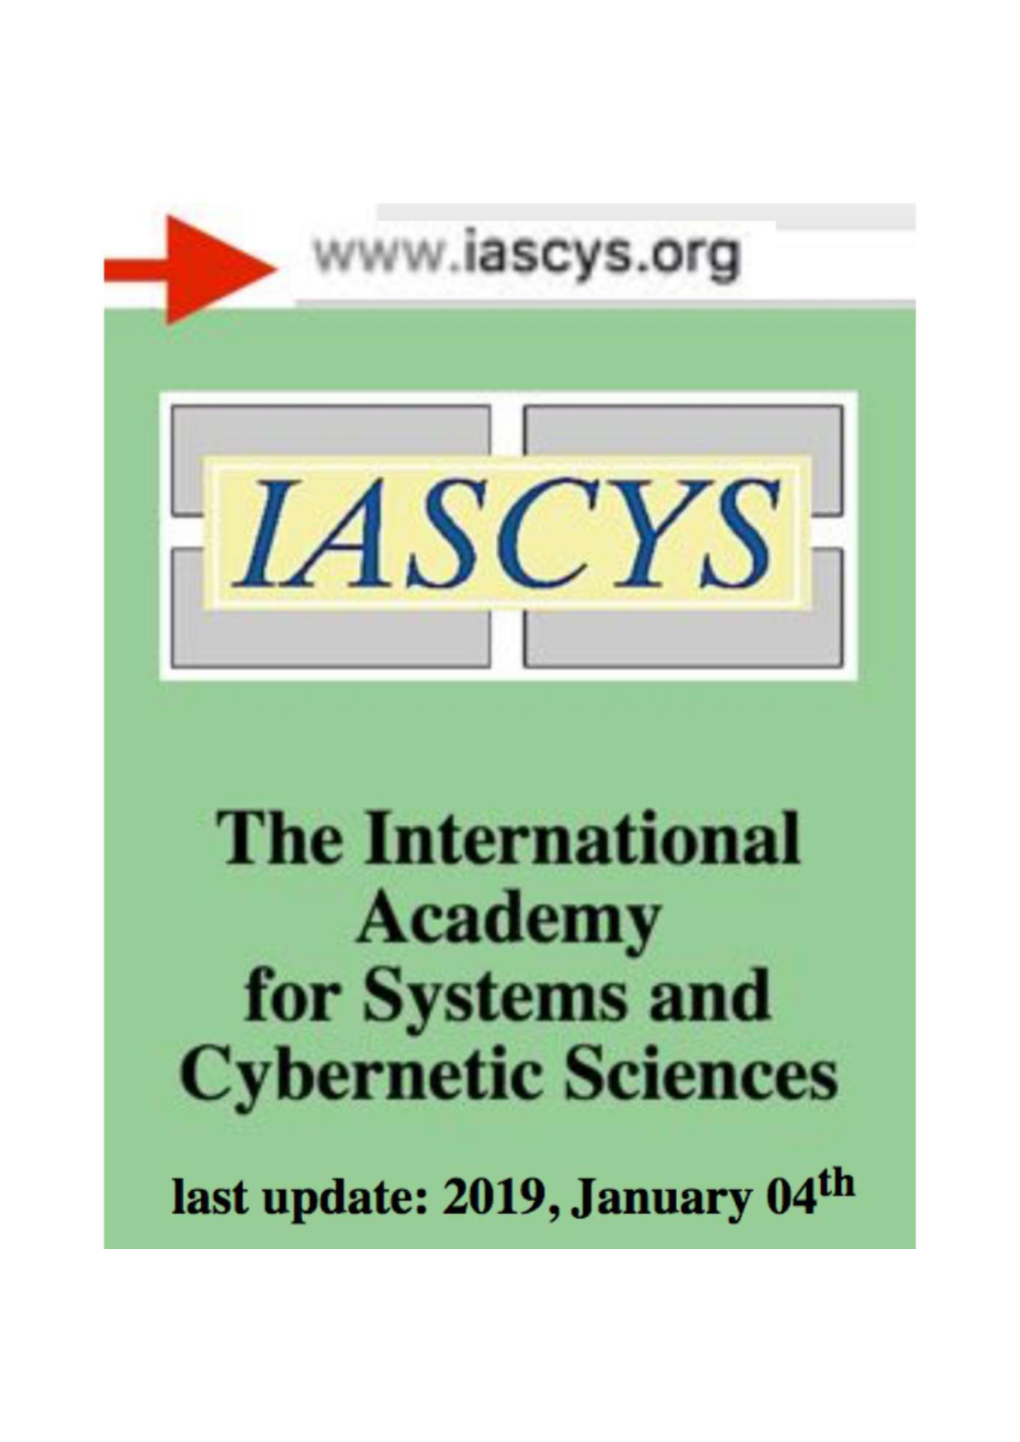 The 2018 IASCYS Yearbook